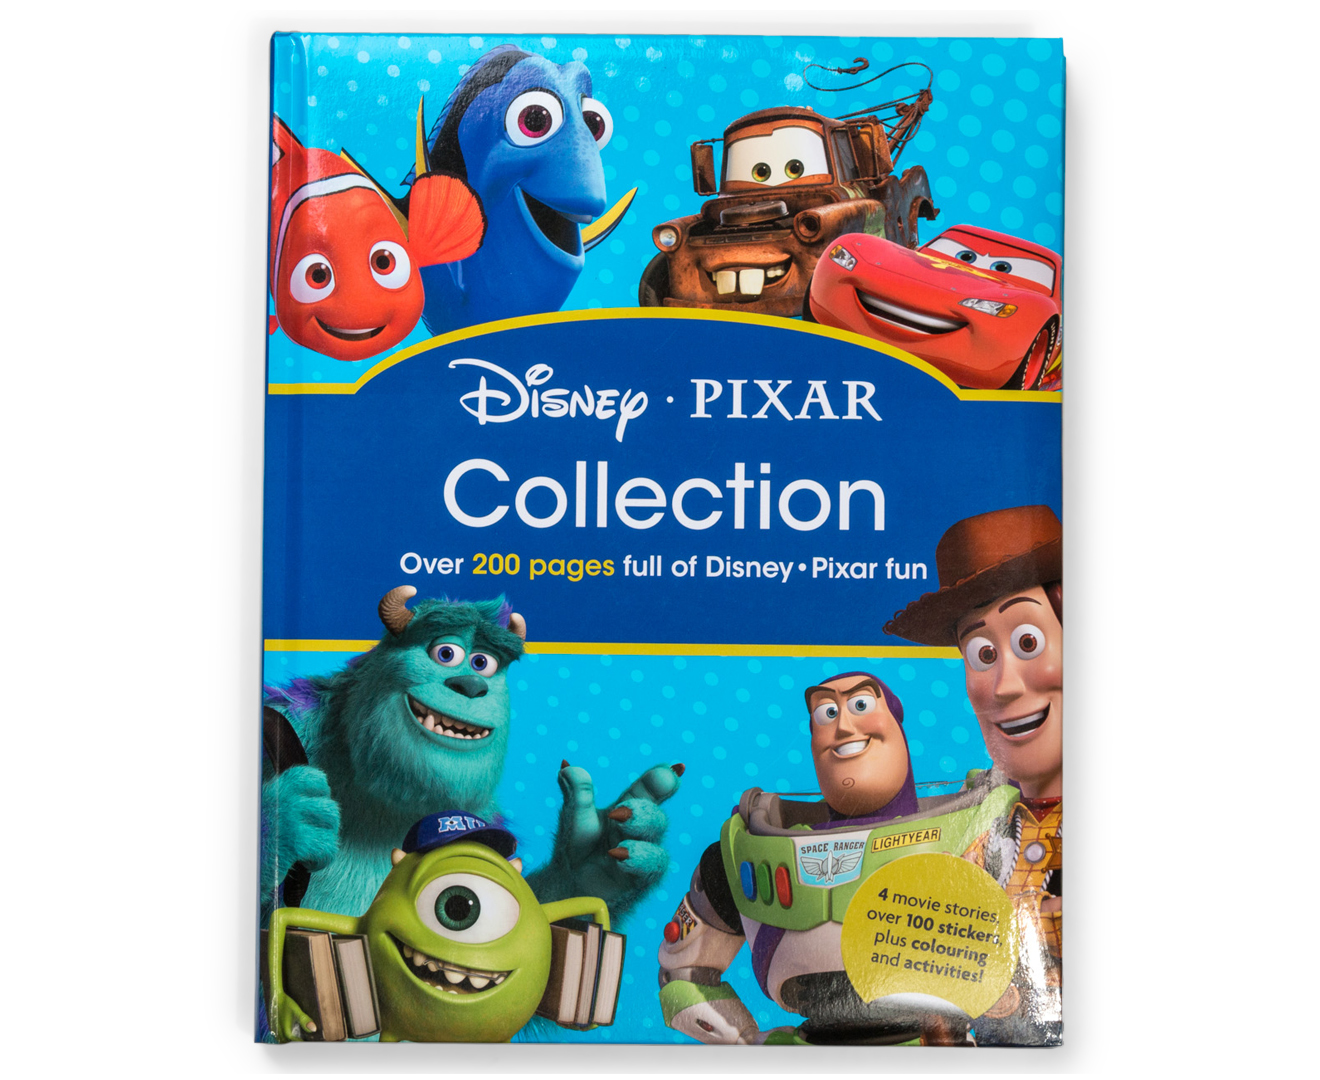 Pixar collection. Disney Pixar collection. Пиксар книга. Книги коллекционные Disney-Pixar. Collezione Disney Pixar.